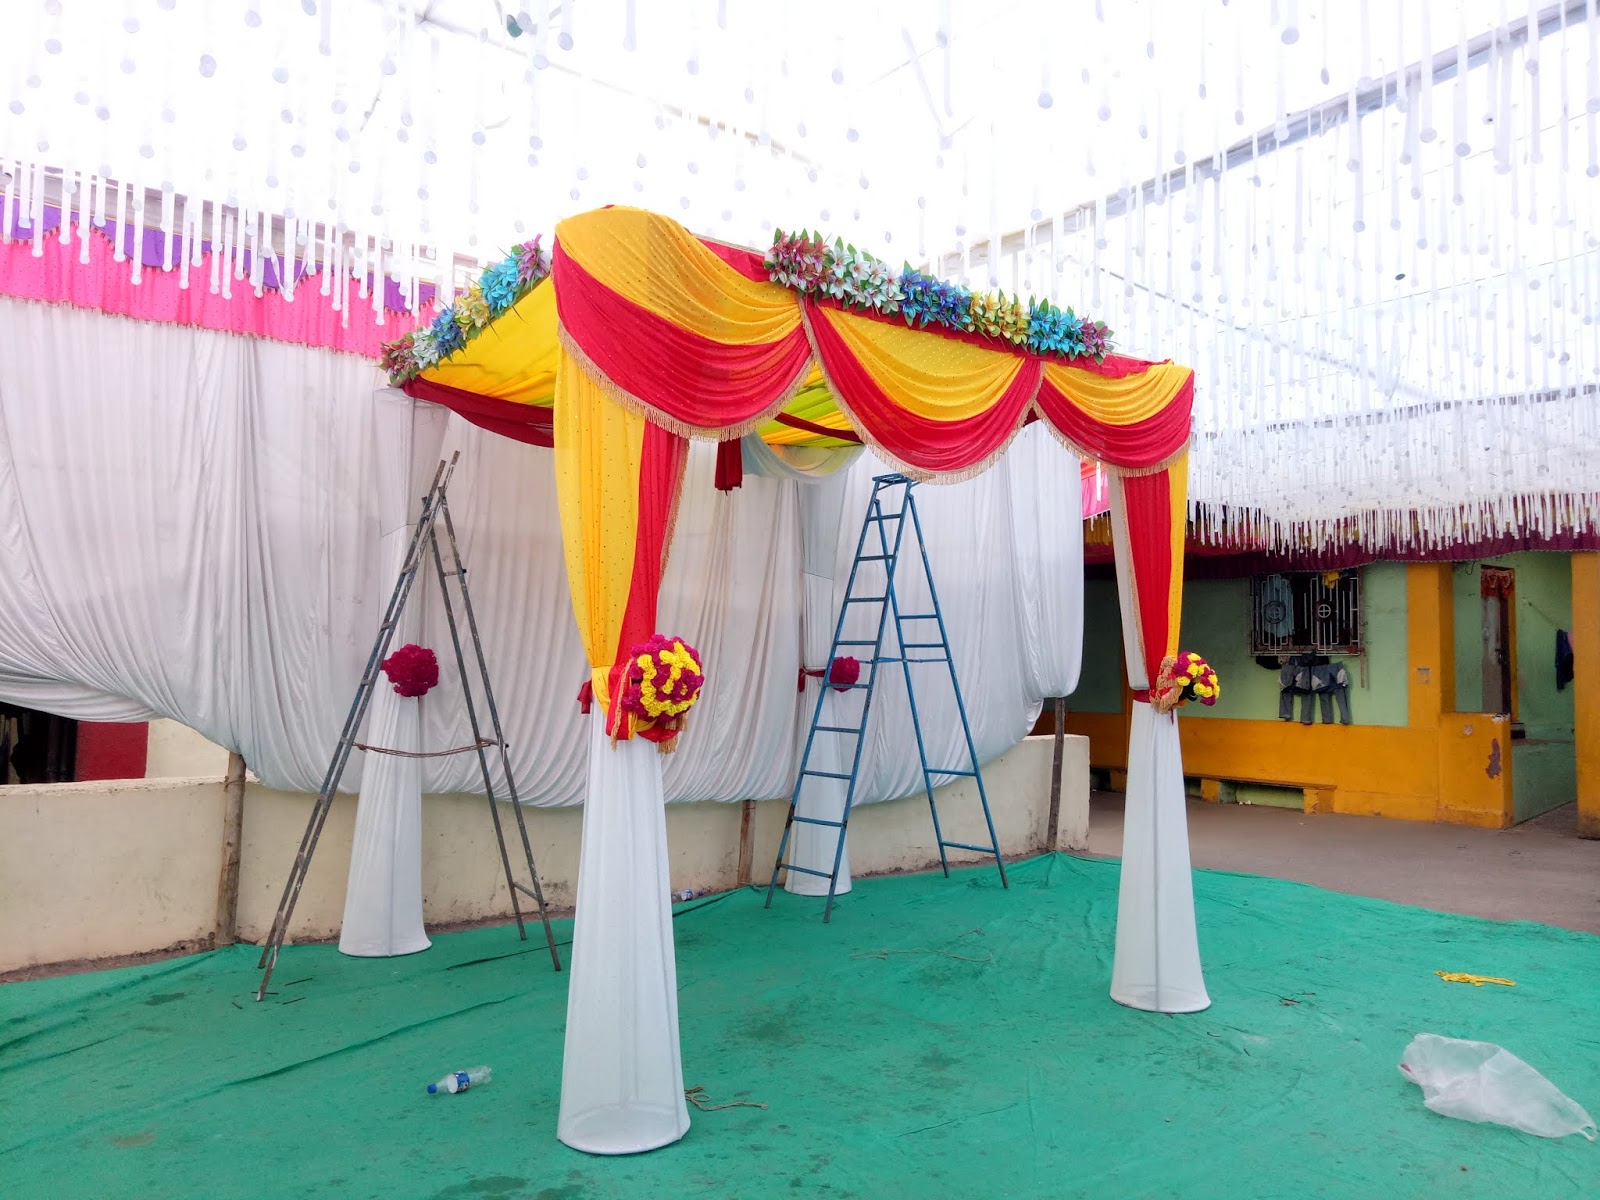 Grand Floral Wedding Mandap Decoration – Anil Events Bangalore